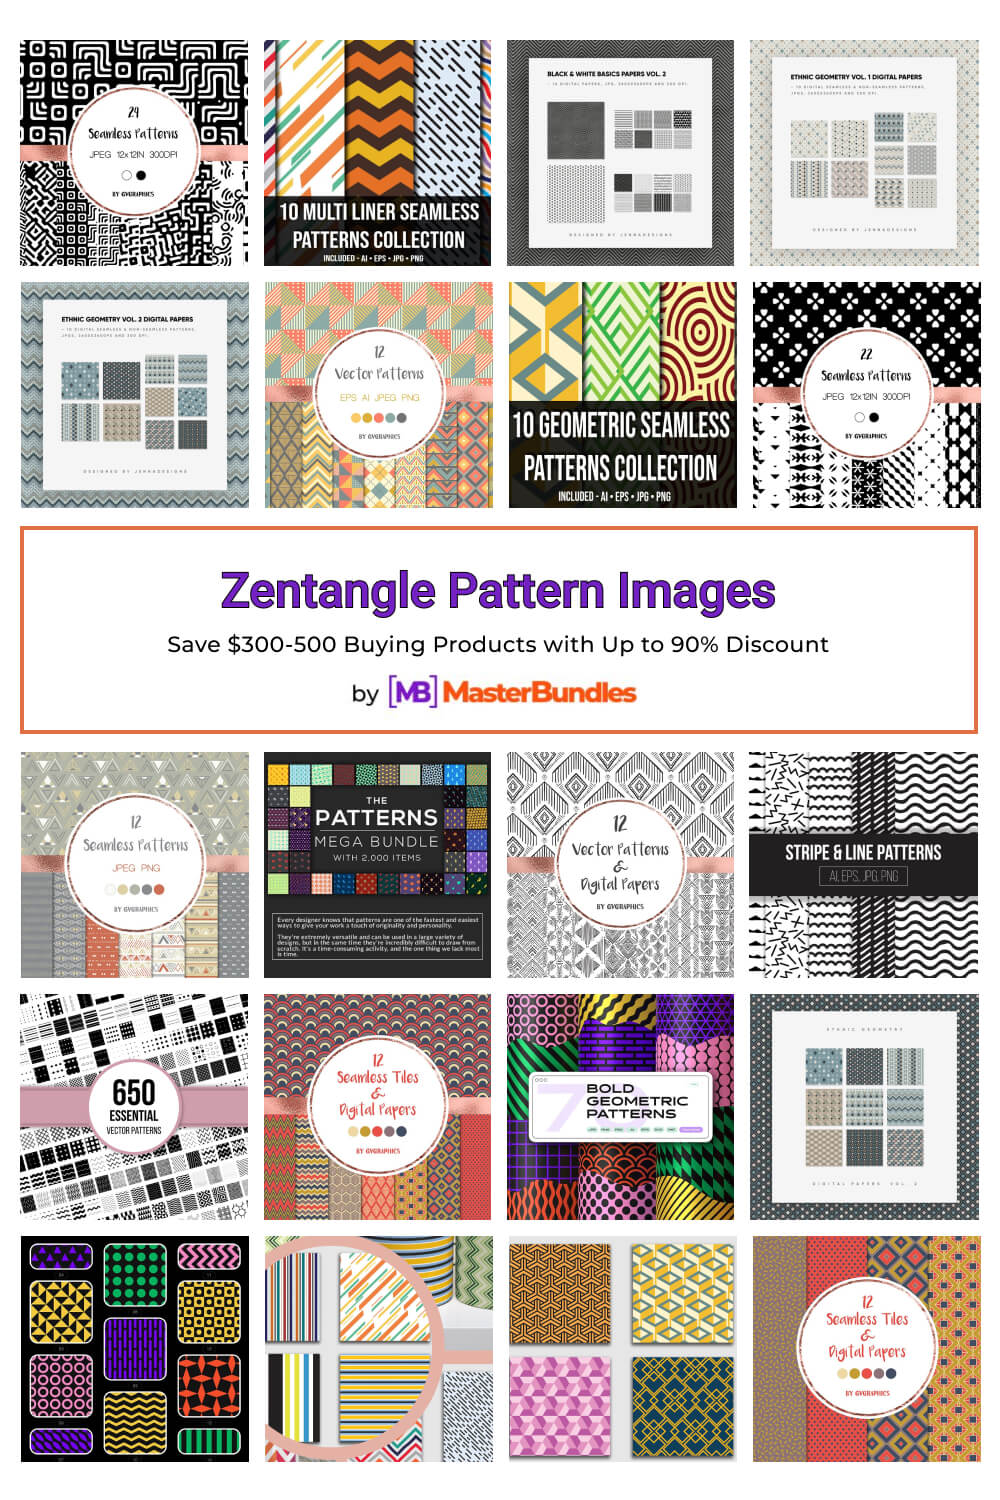 zentangle pattern images pinterest image.